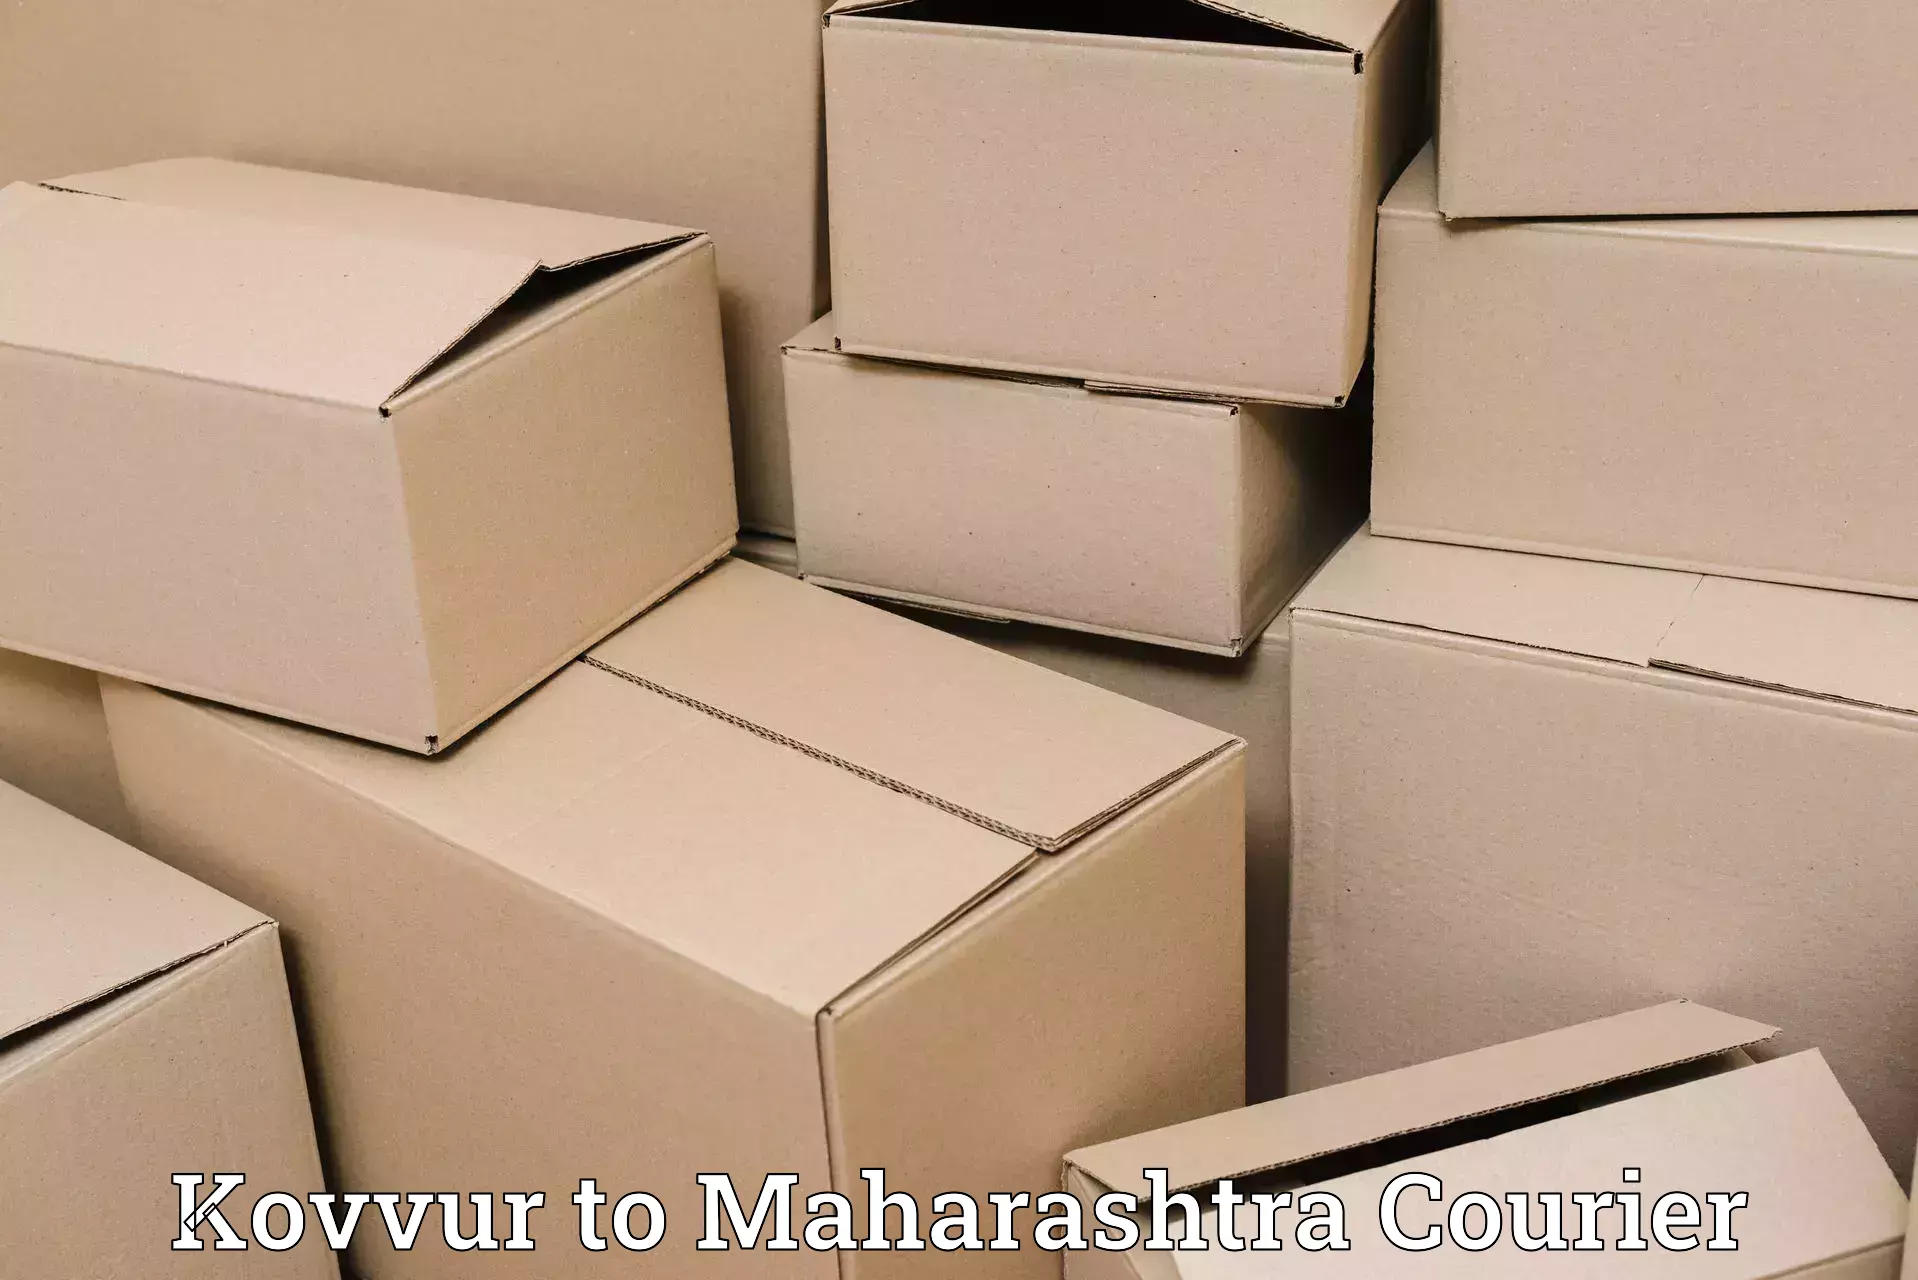 On-call courier service Kovvur to Ratnagiri